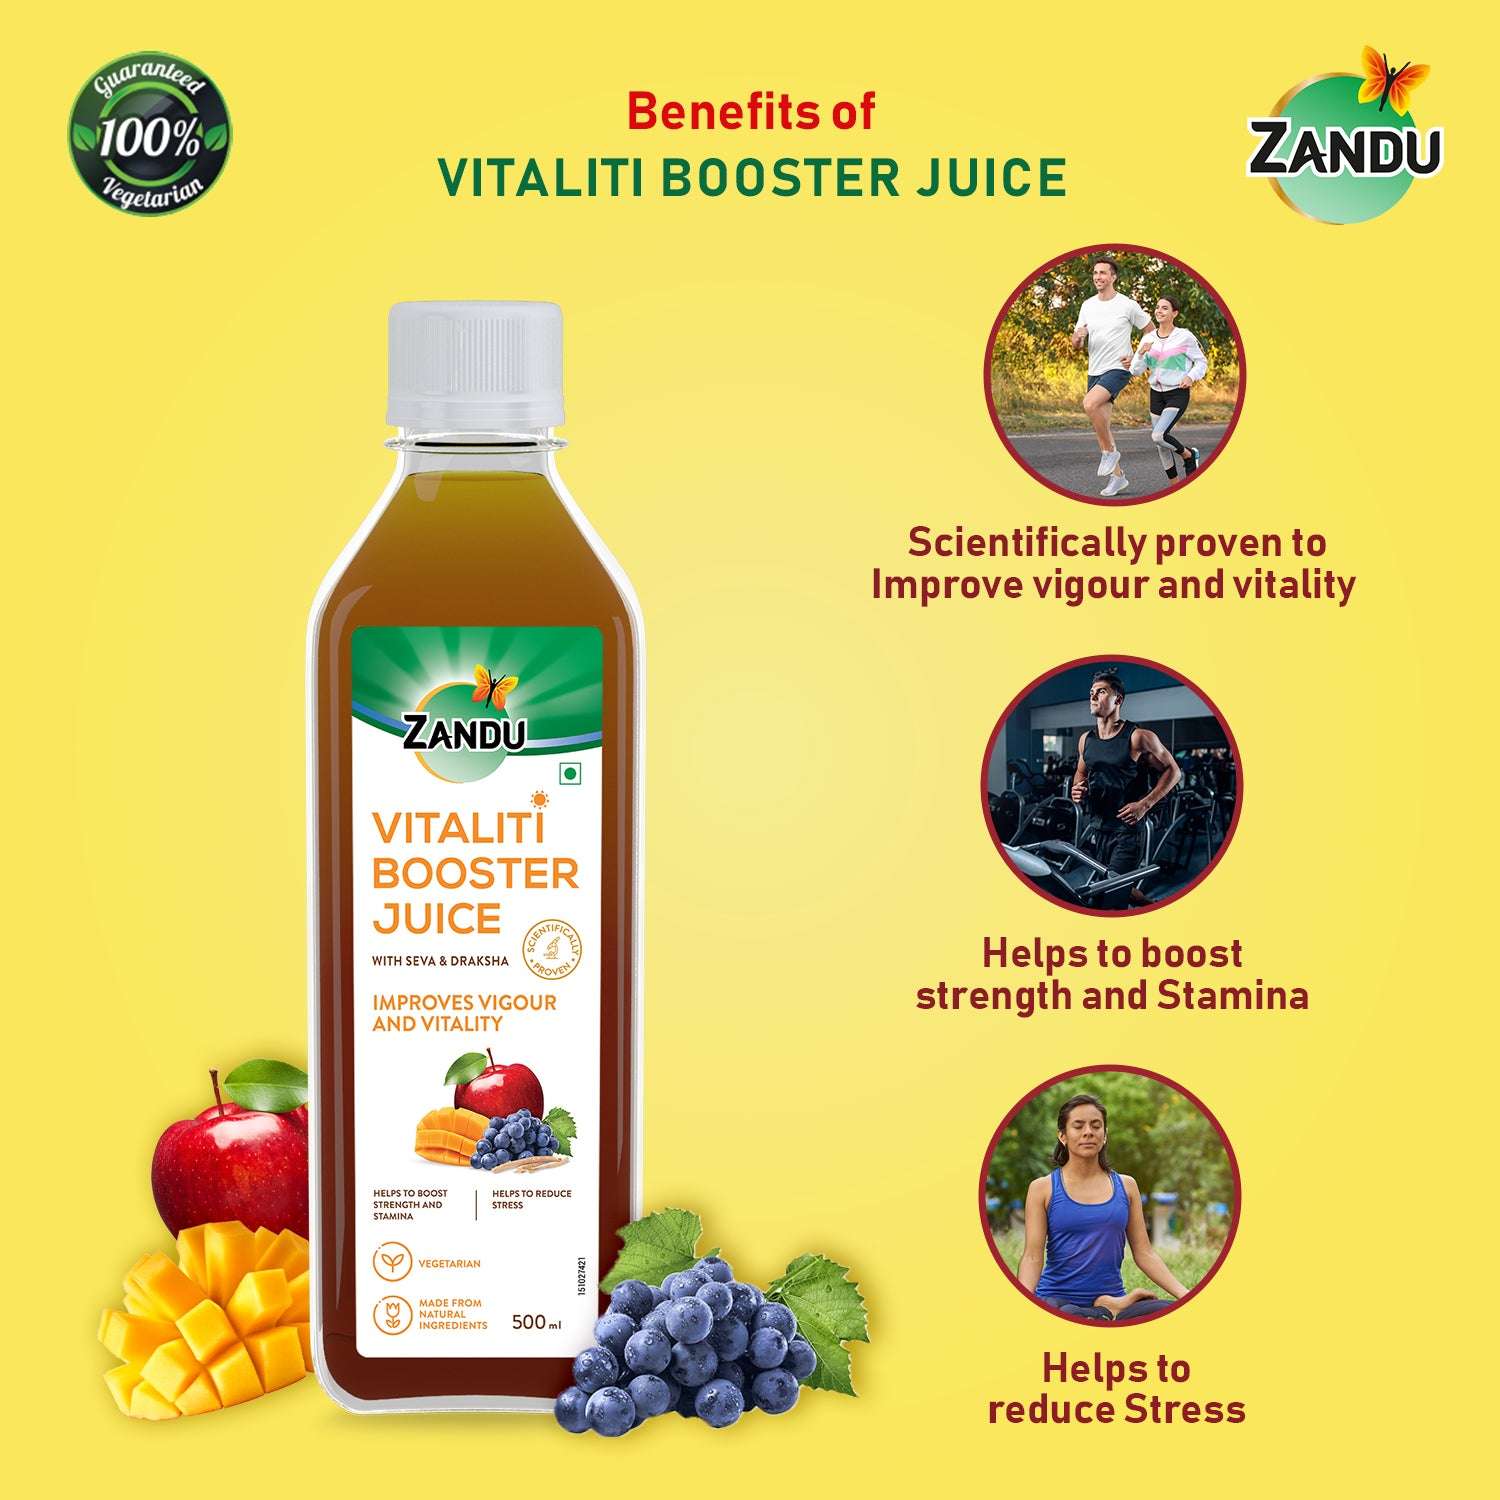 Zandu Vitaliti booster Juice benefits